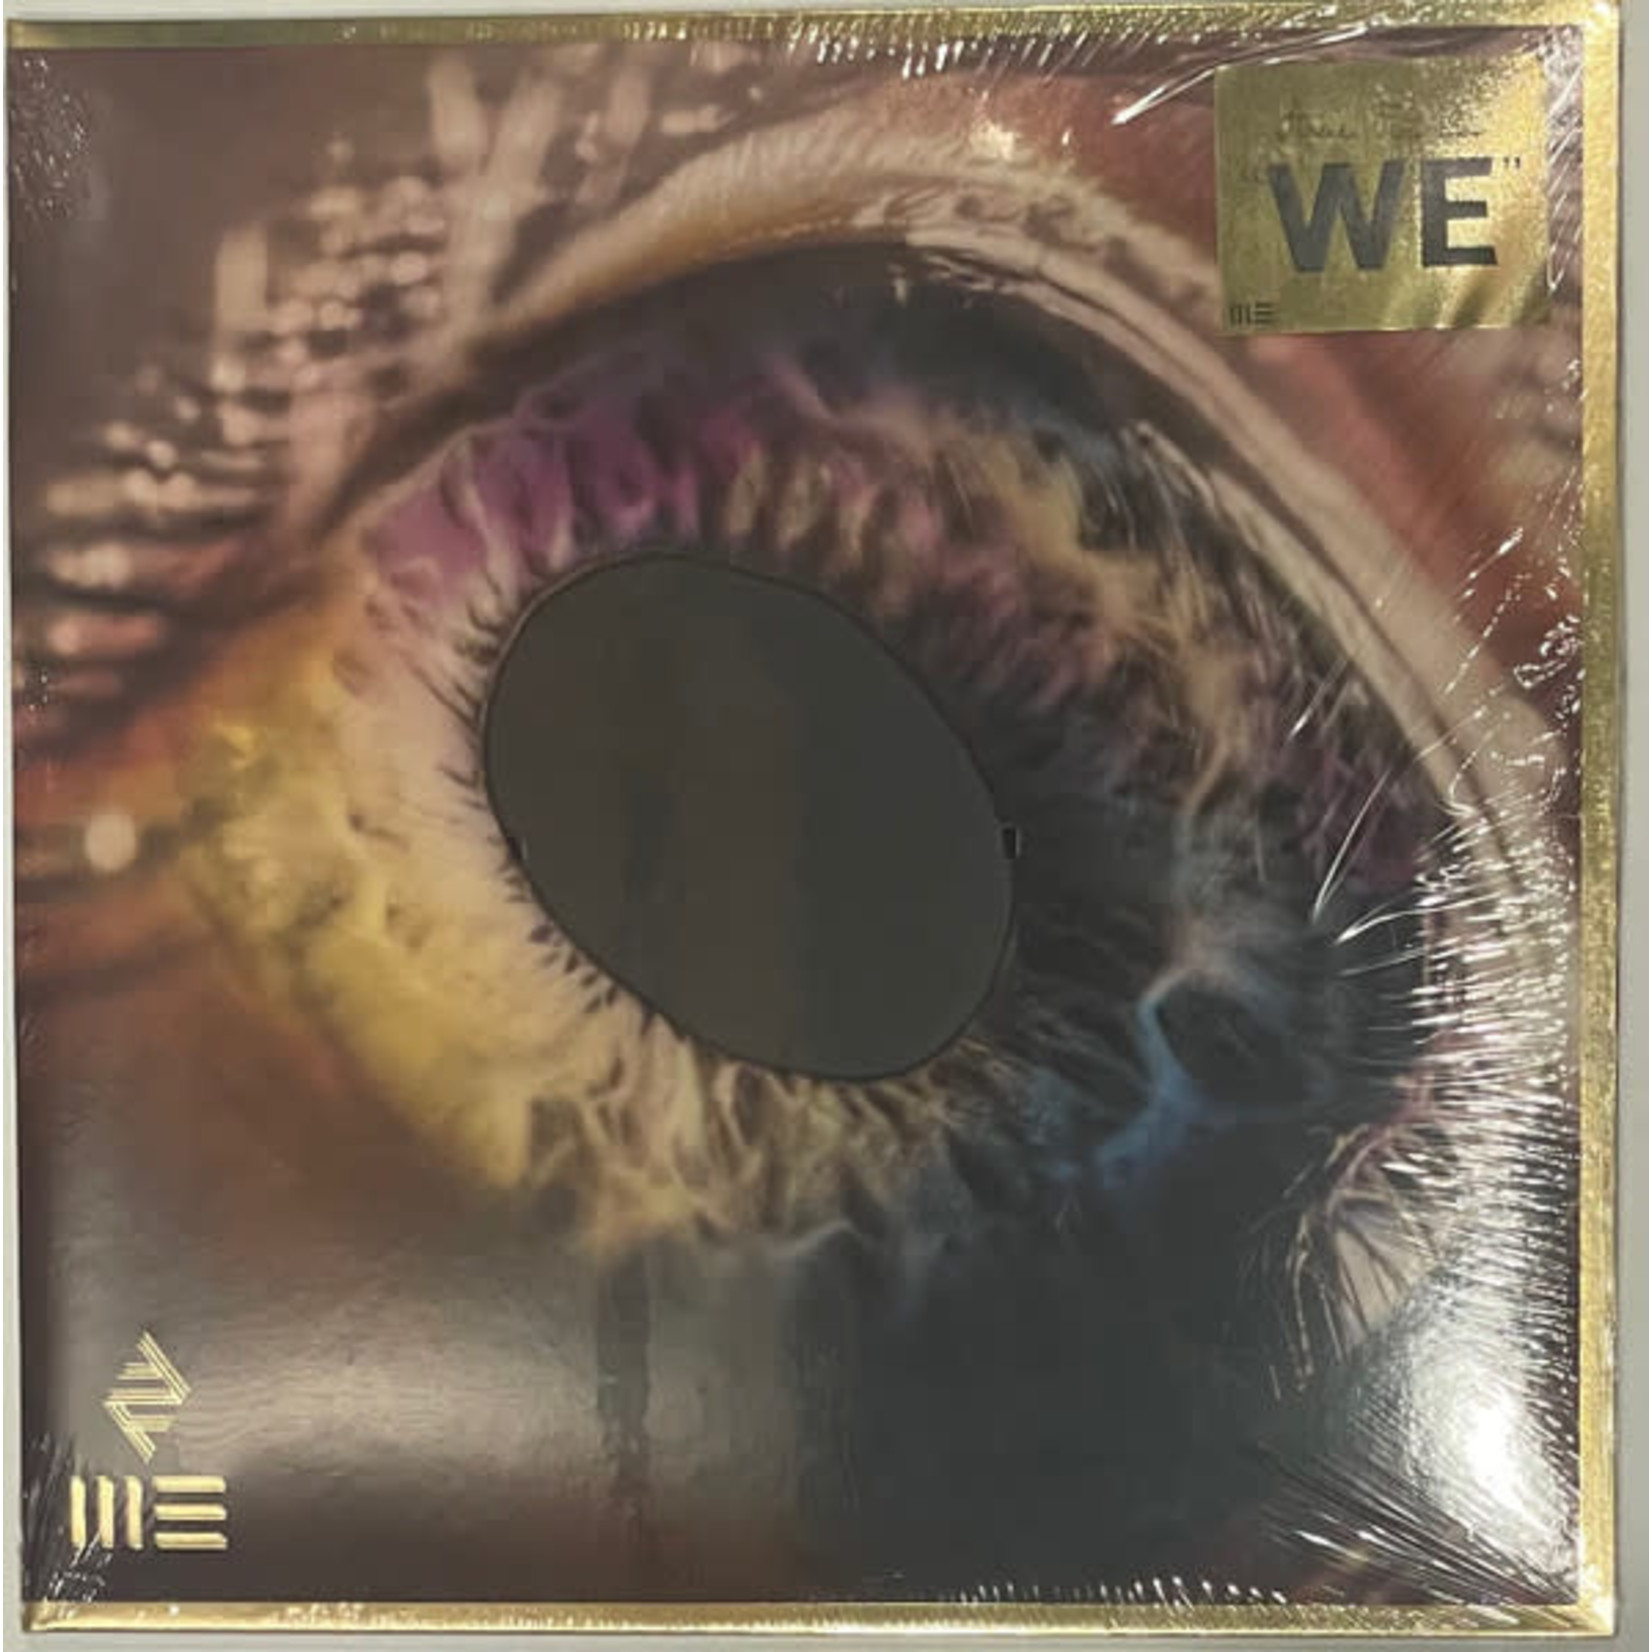 Arcade Fire – We (New)